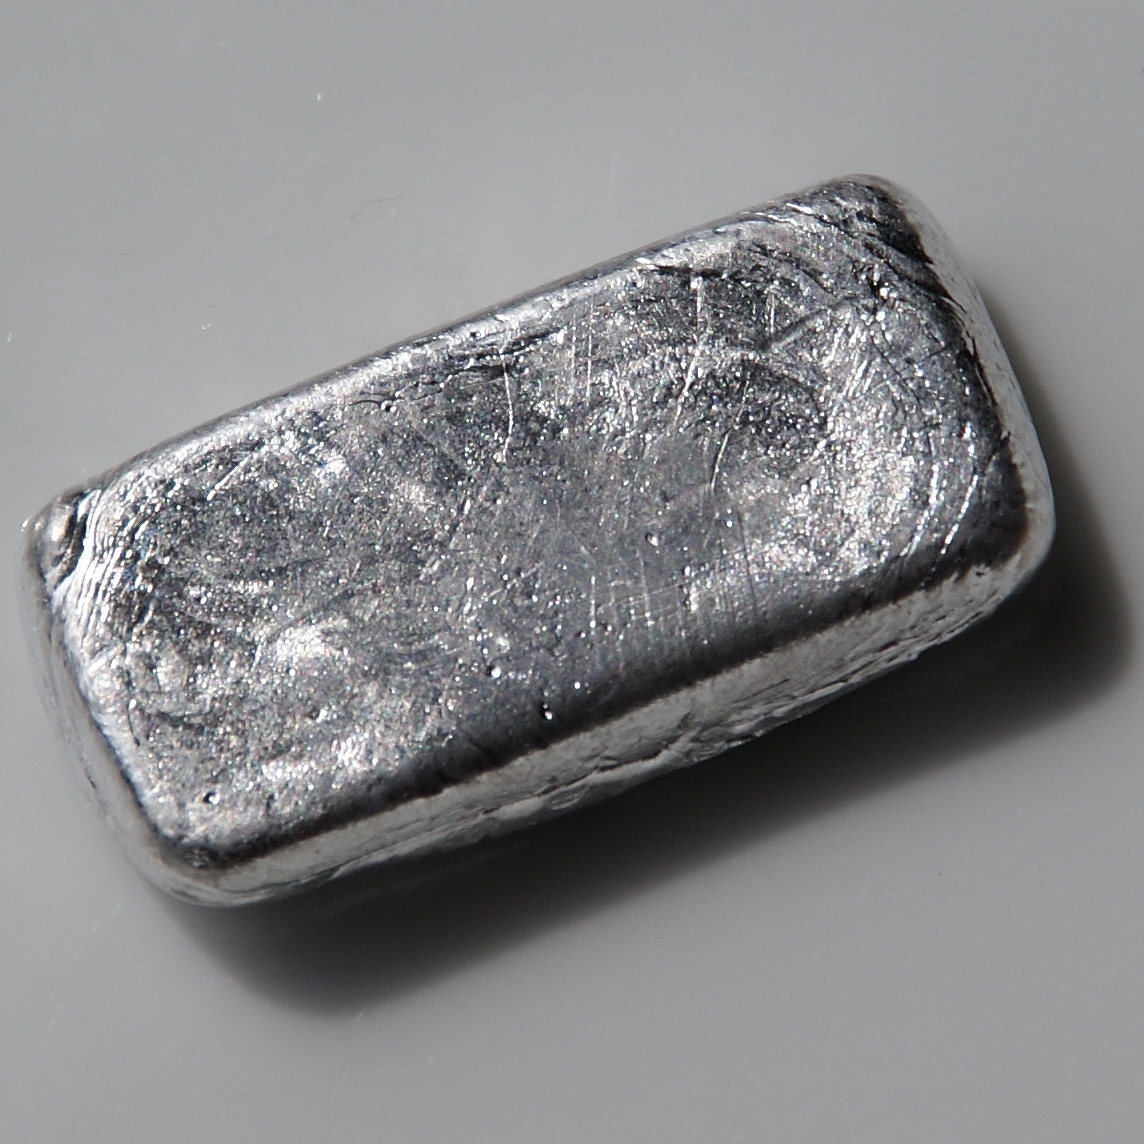 Details about   5 GRAMS INDIUM bar bullion ingot 5g Rare earth element metal FSB MINT 